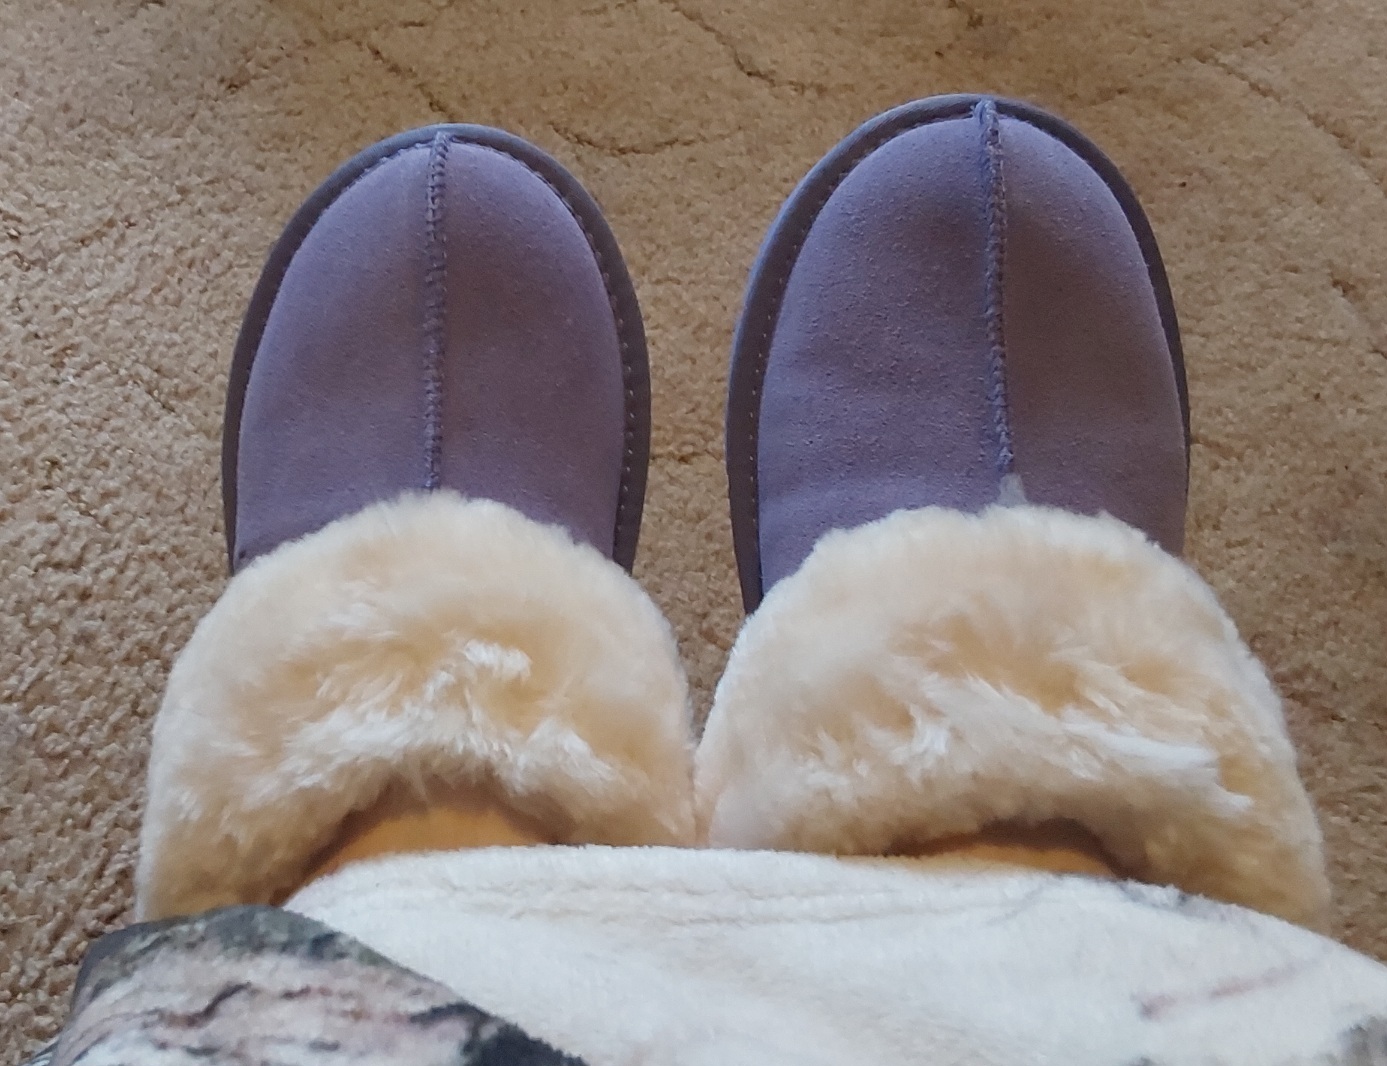 Purple slippers